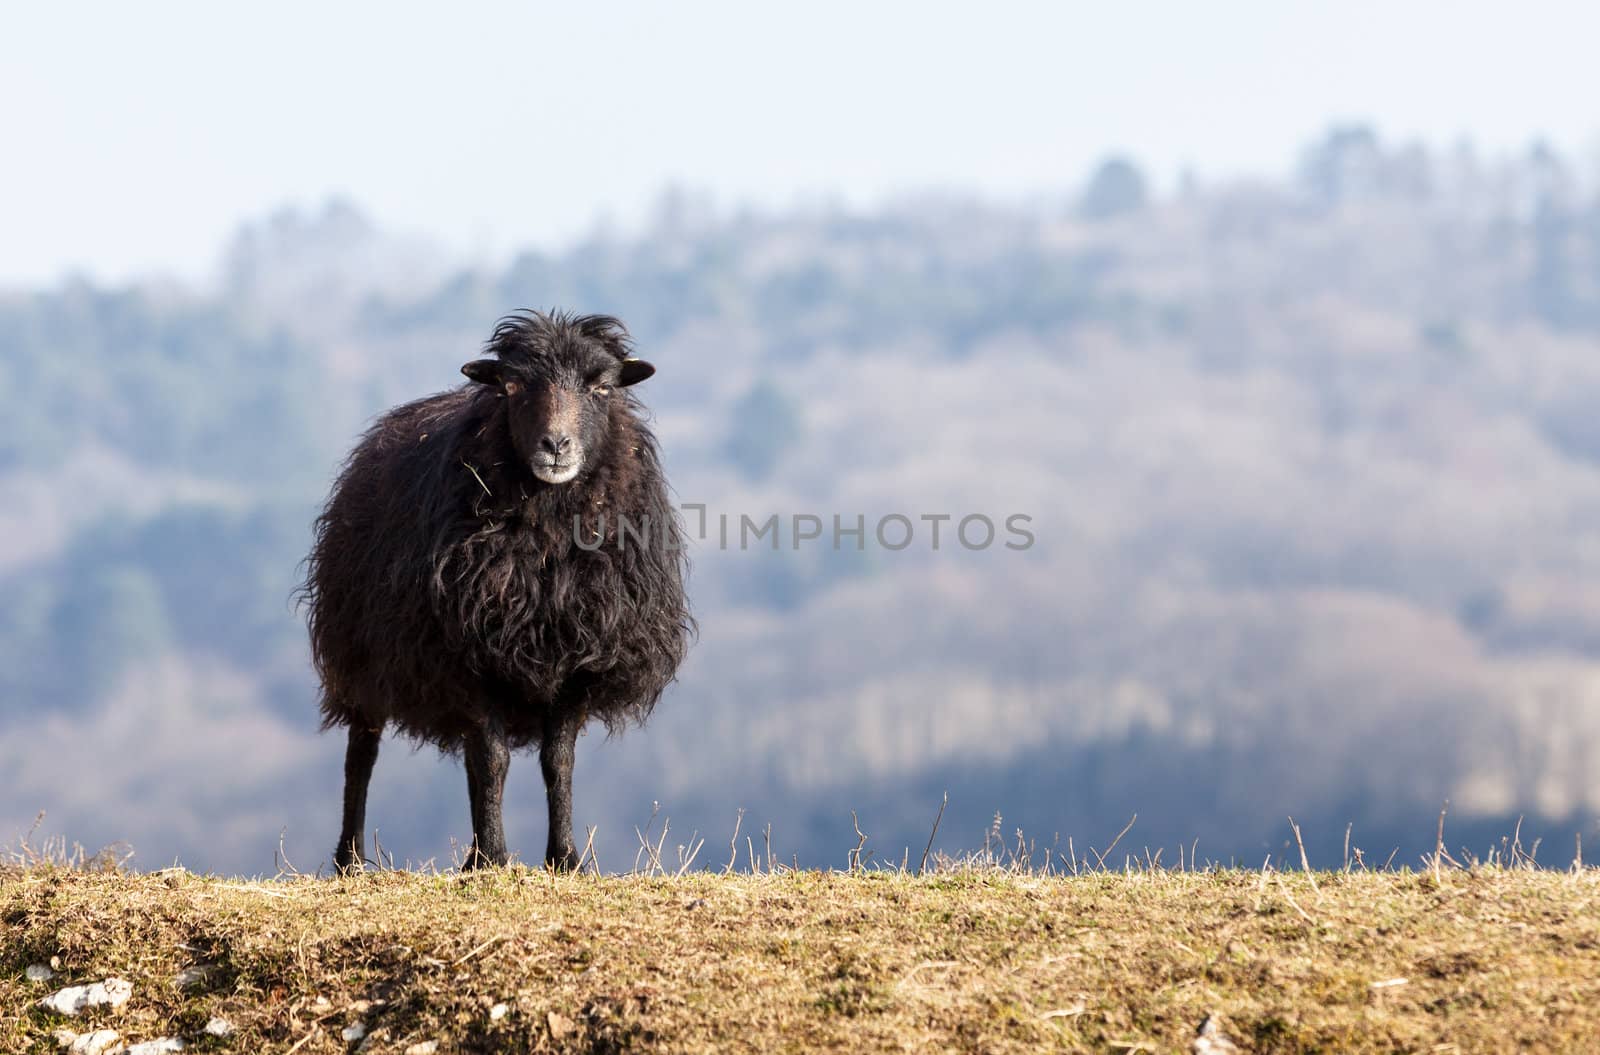 Black Domestic Sheep by RazvanPhotography